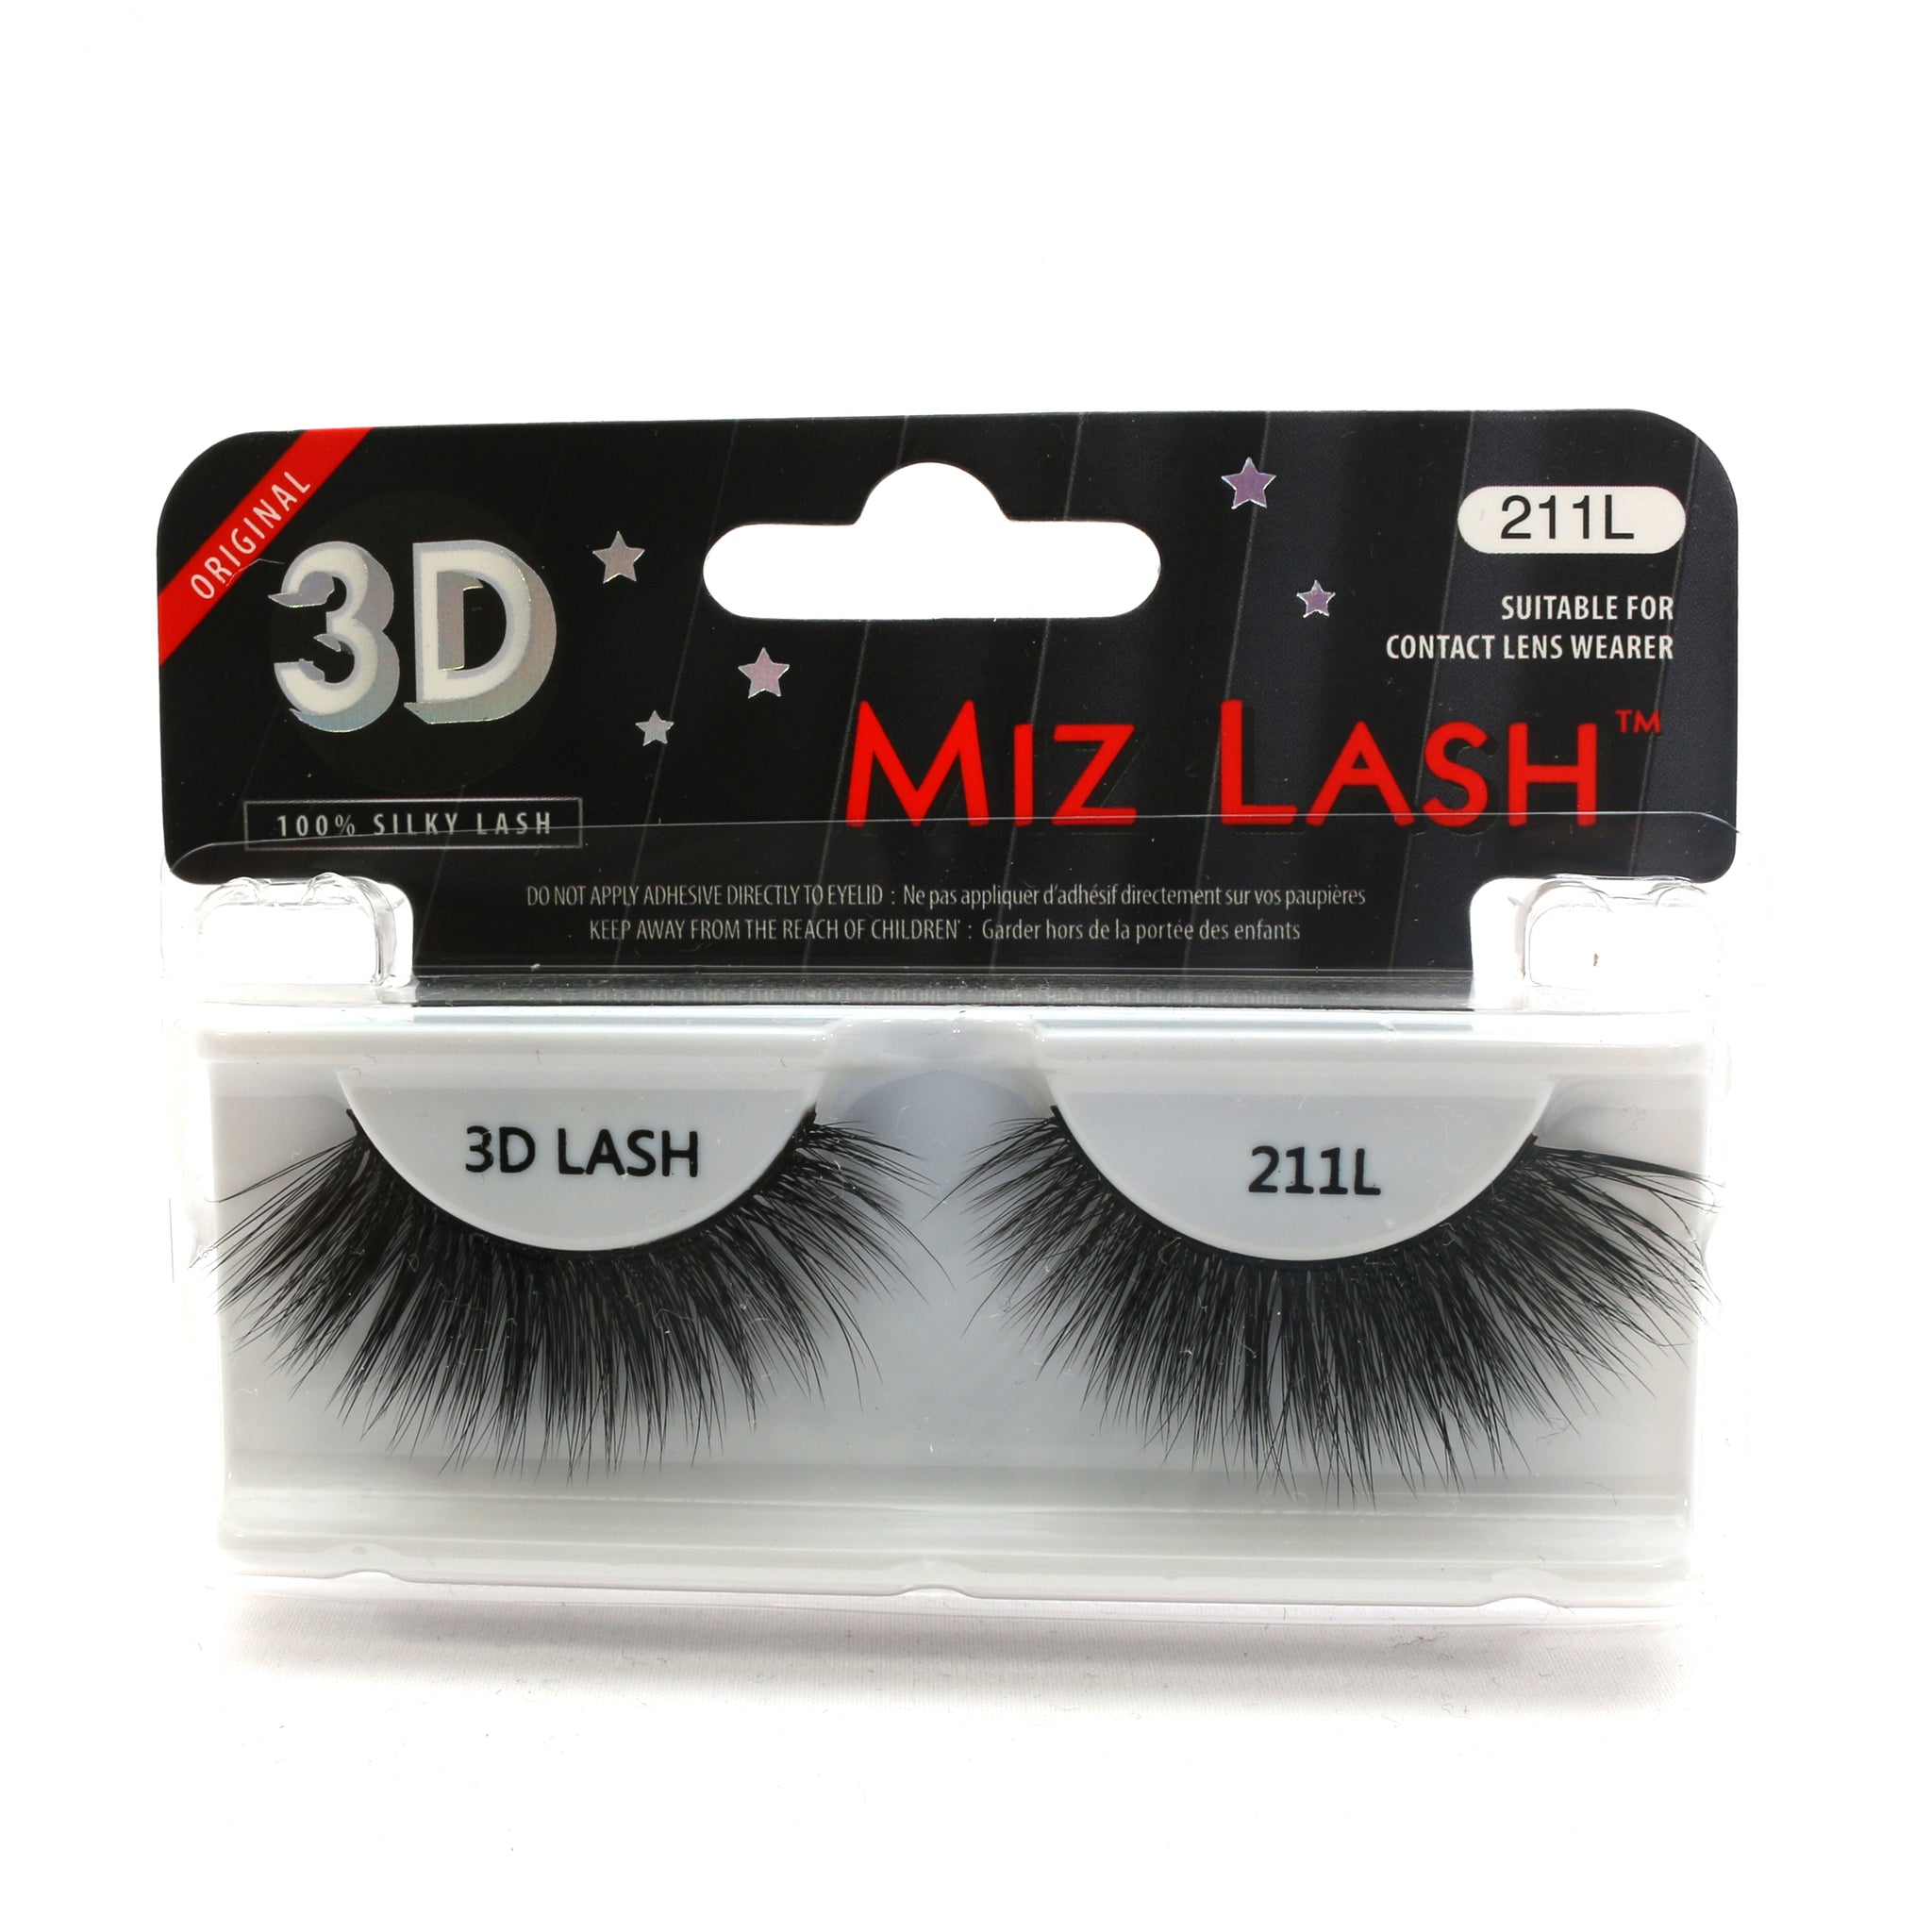 3D MIZ LASH 211L-Miz Lashes- Hive Beauty Supply